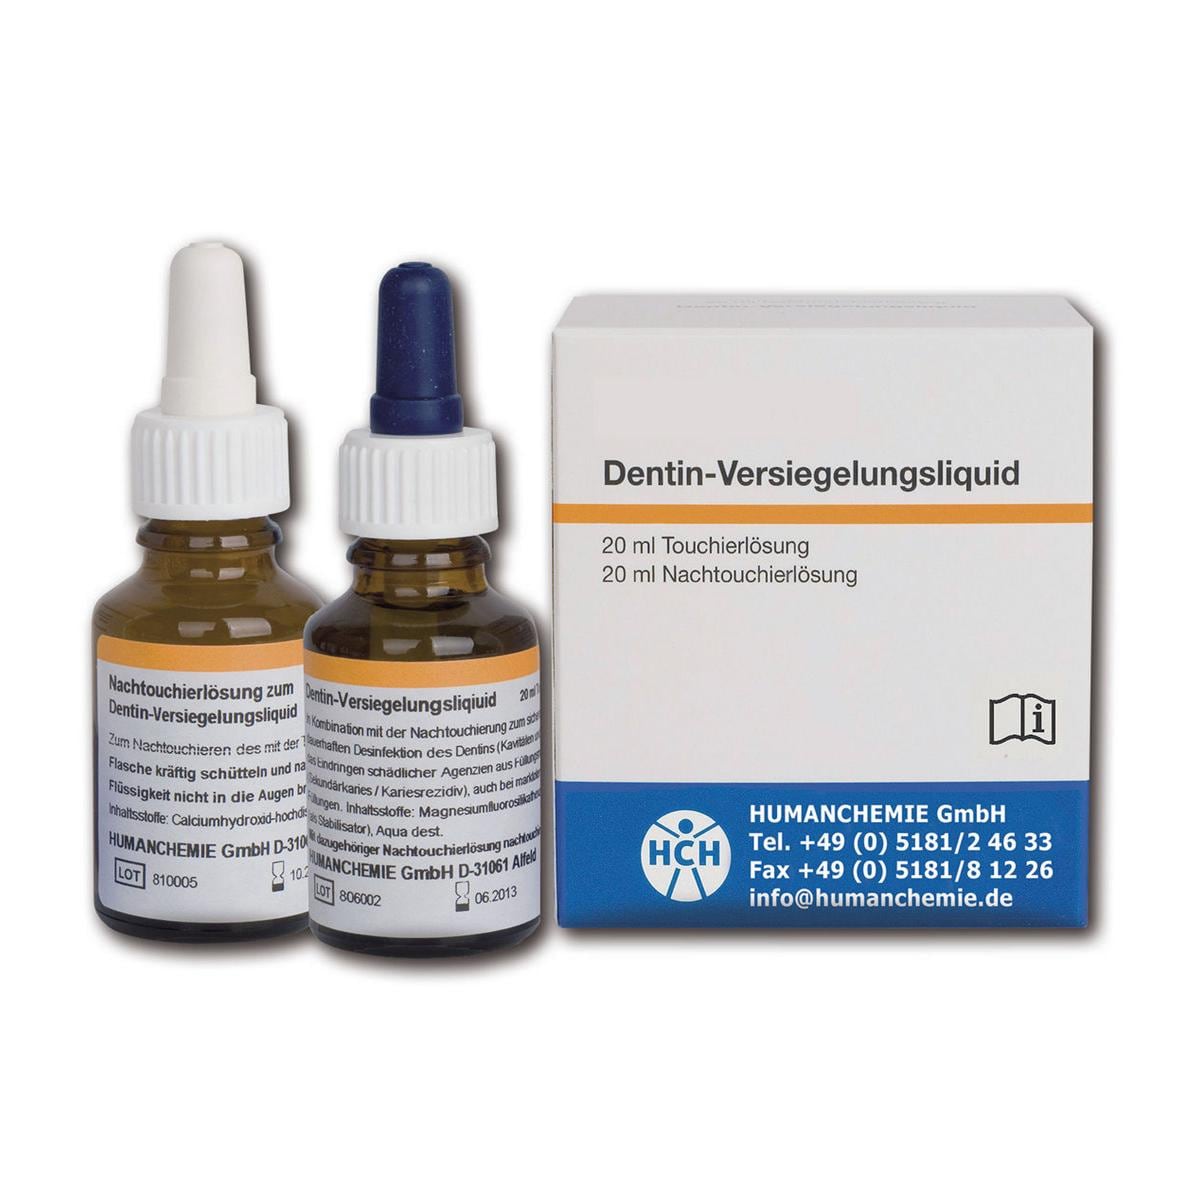 Dentin-Versiegelungsliquid - Packung 2 x 20 ml